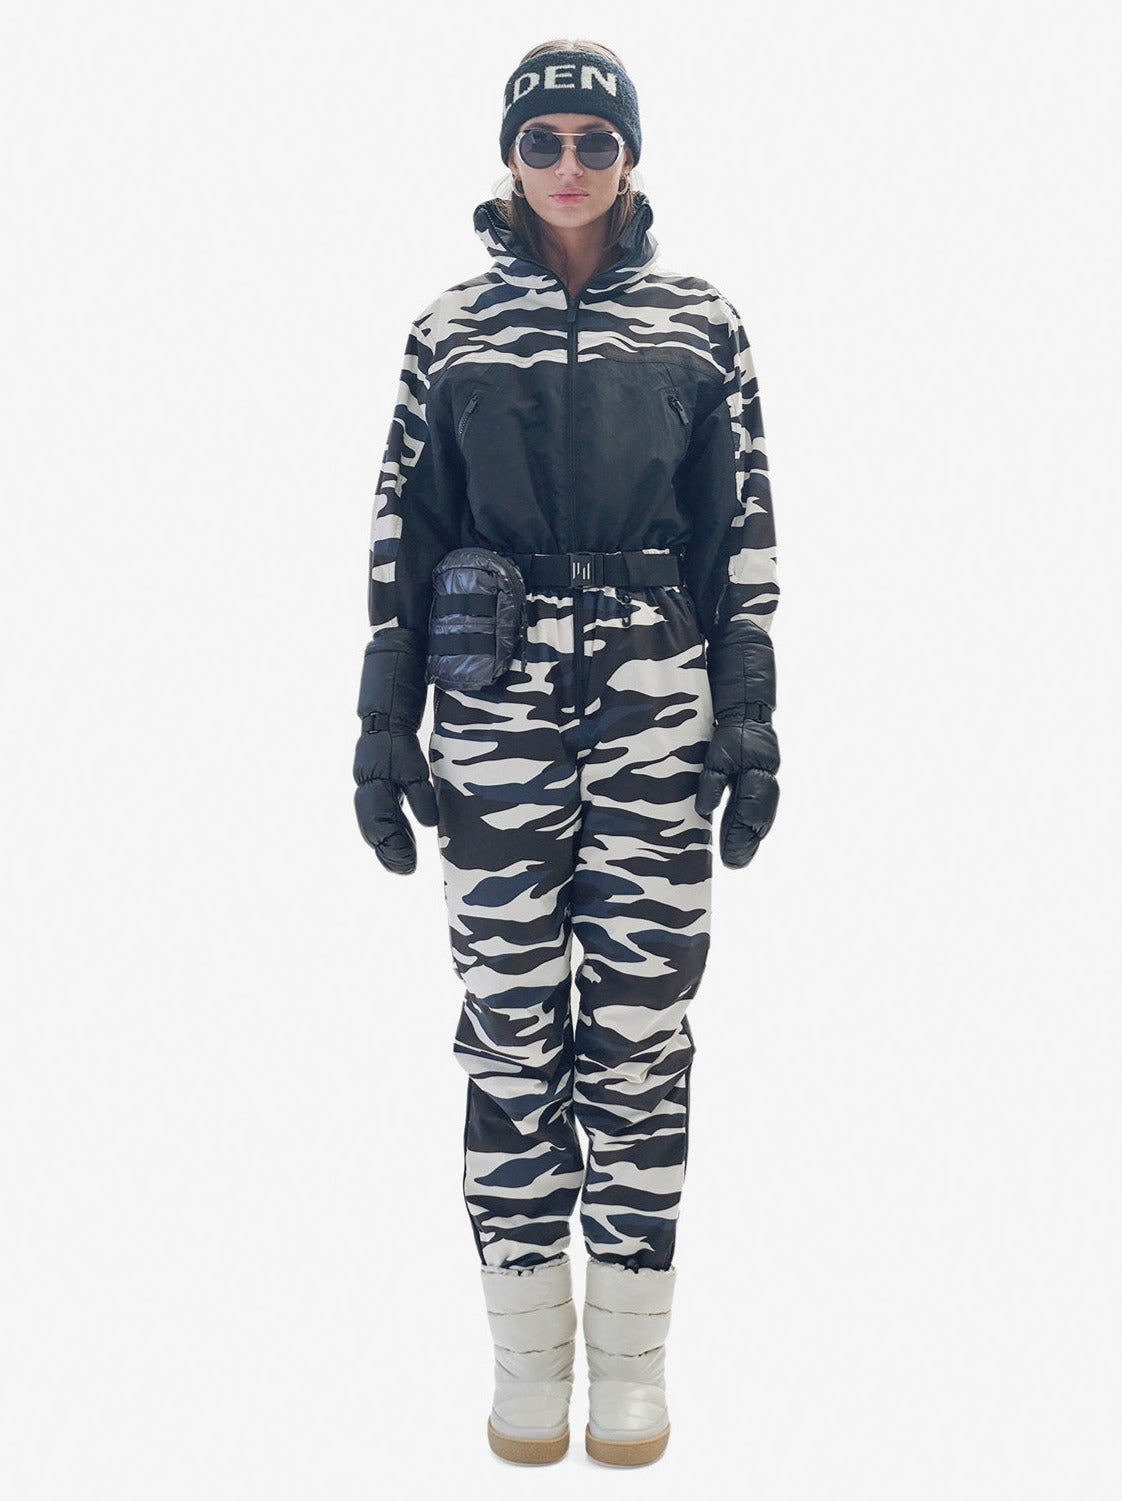 Women's Powder Suit - Zebra - front